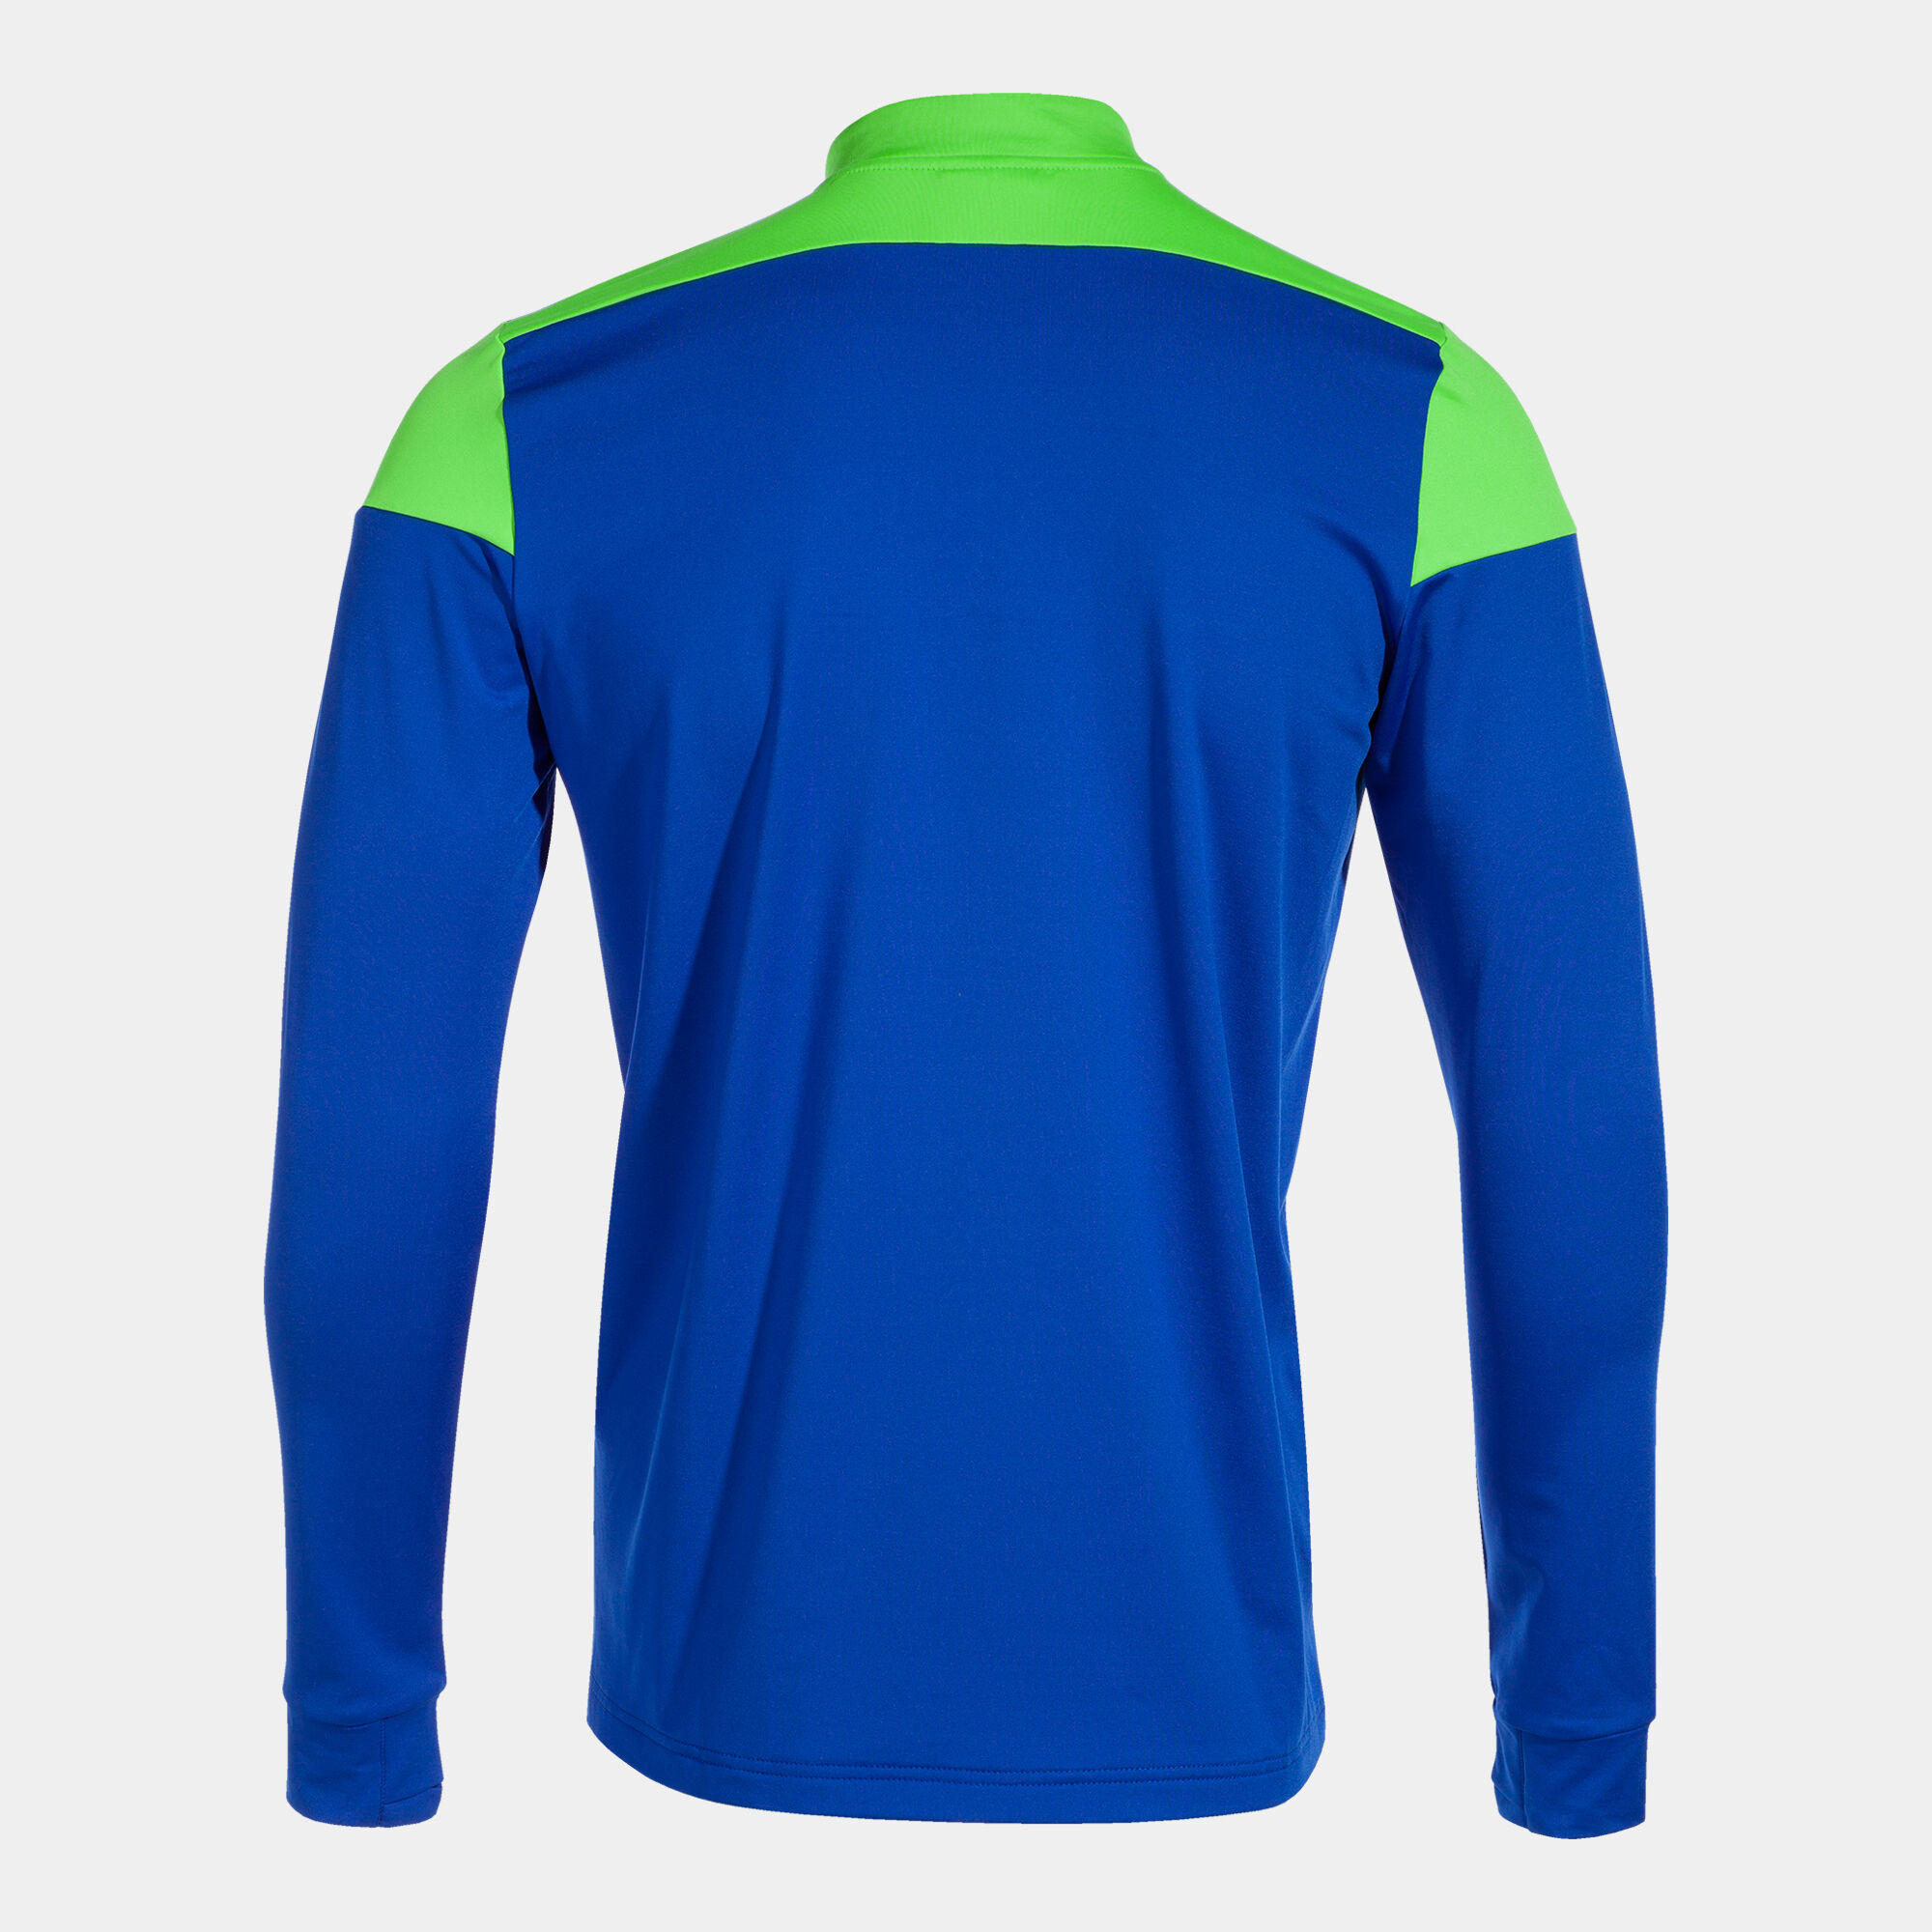 Sweat-shirt homme Elite X bleu roi vert fluo